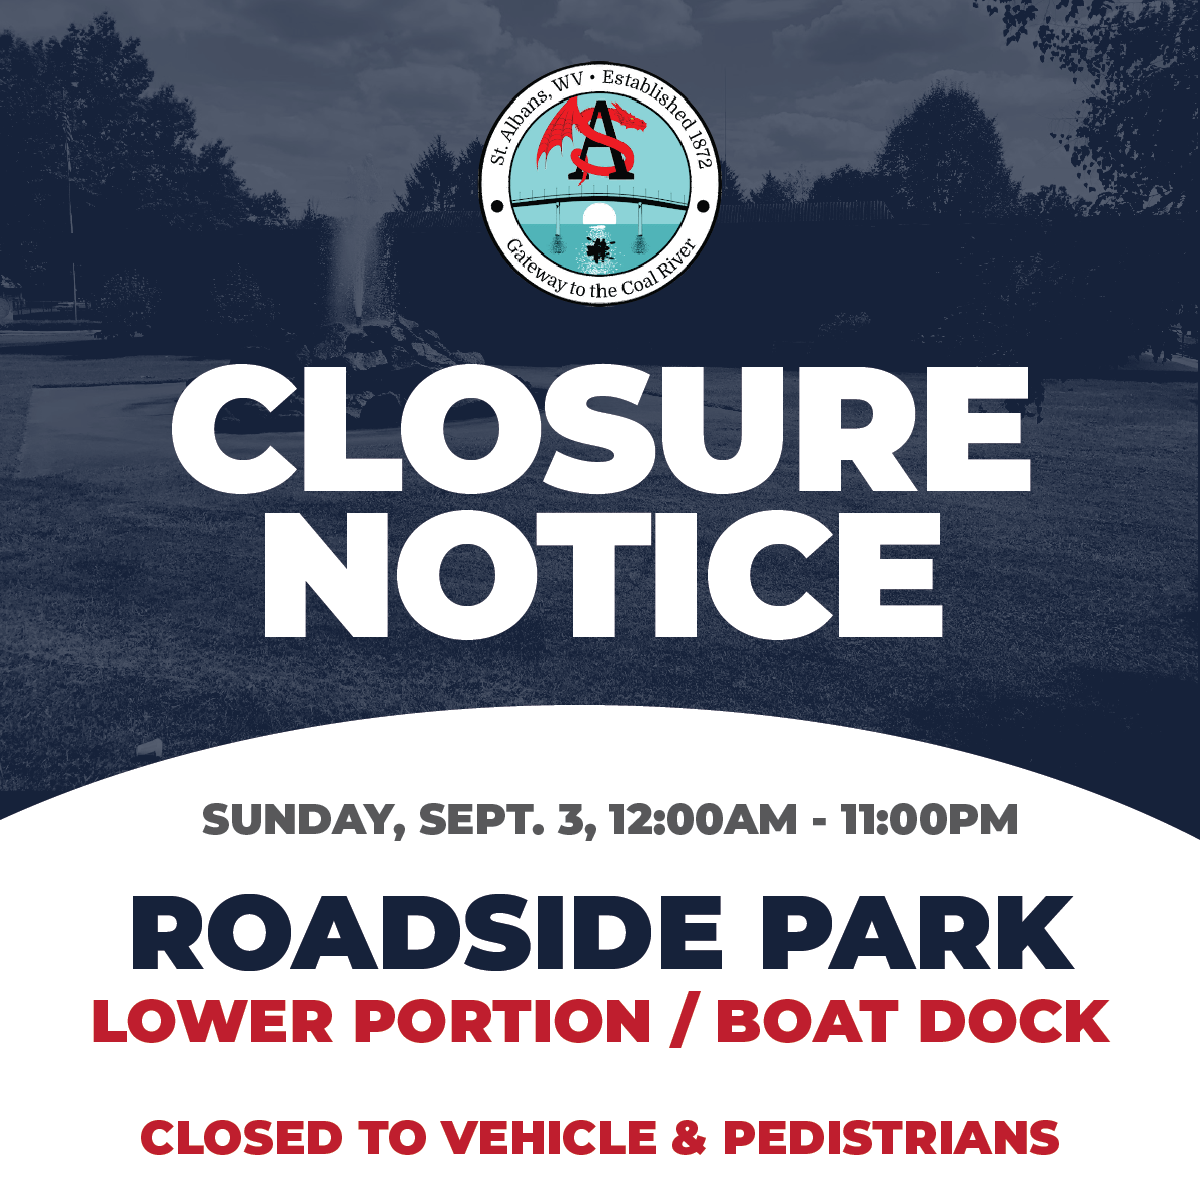 Public Closure Notice for Roadside Park - City of St. Albans, WV